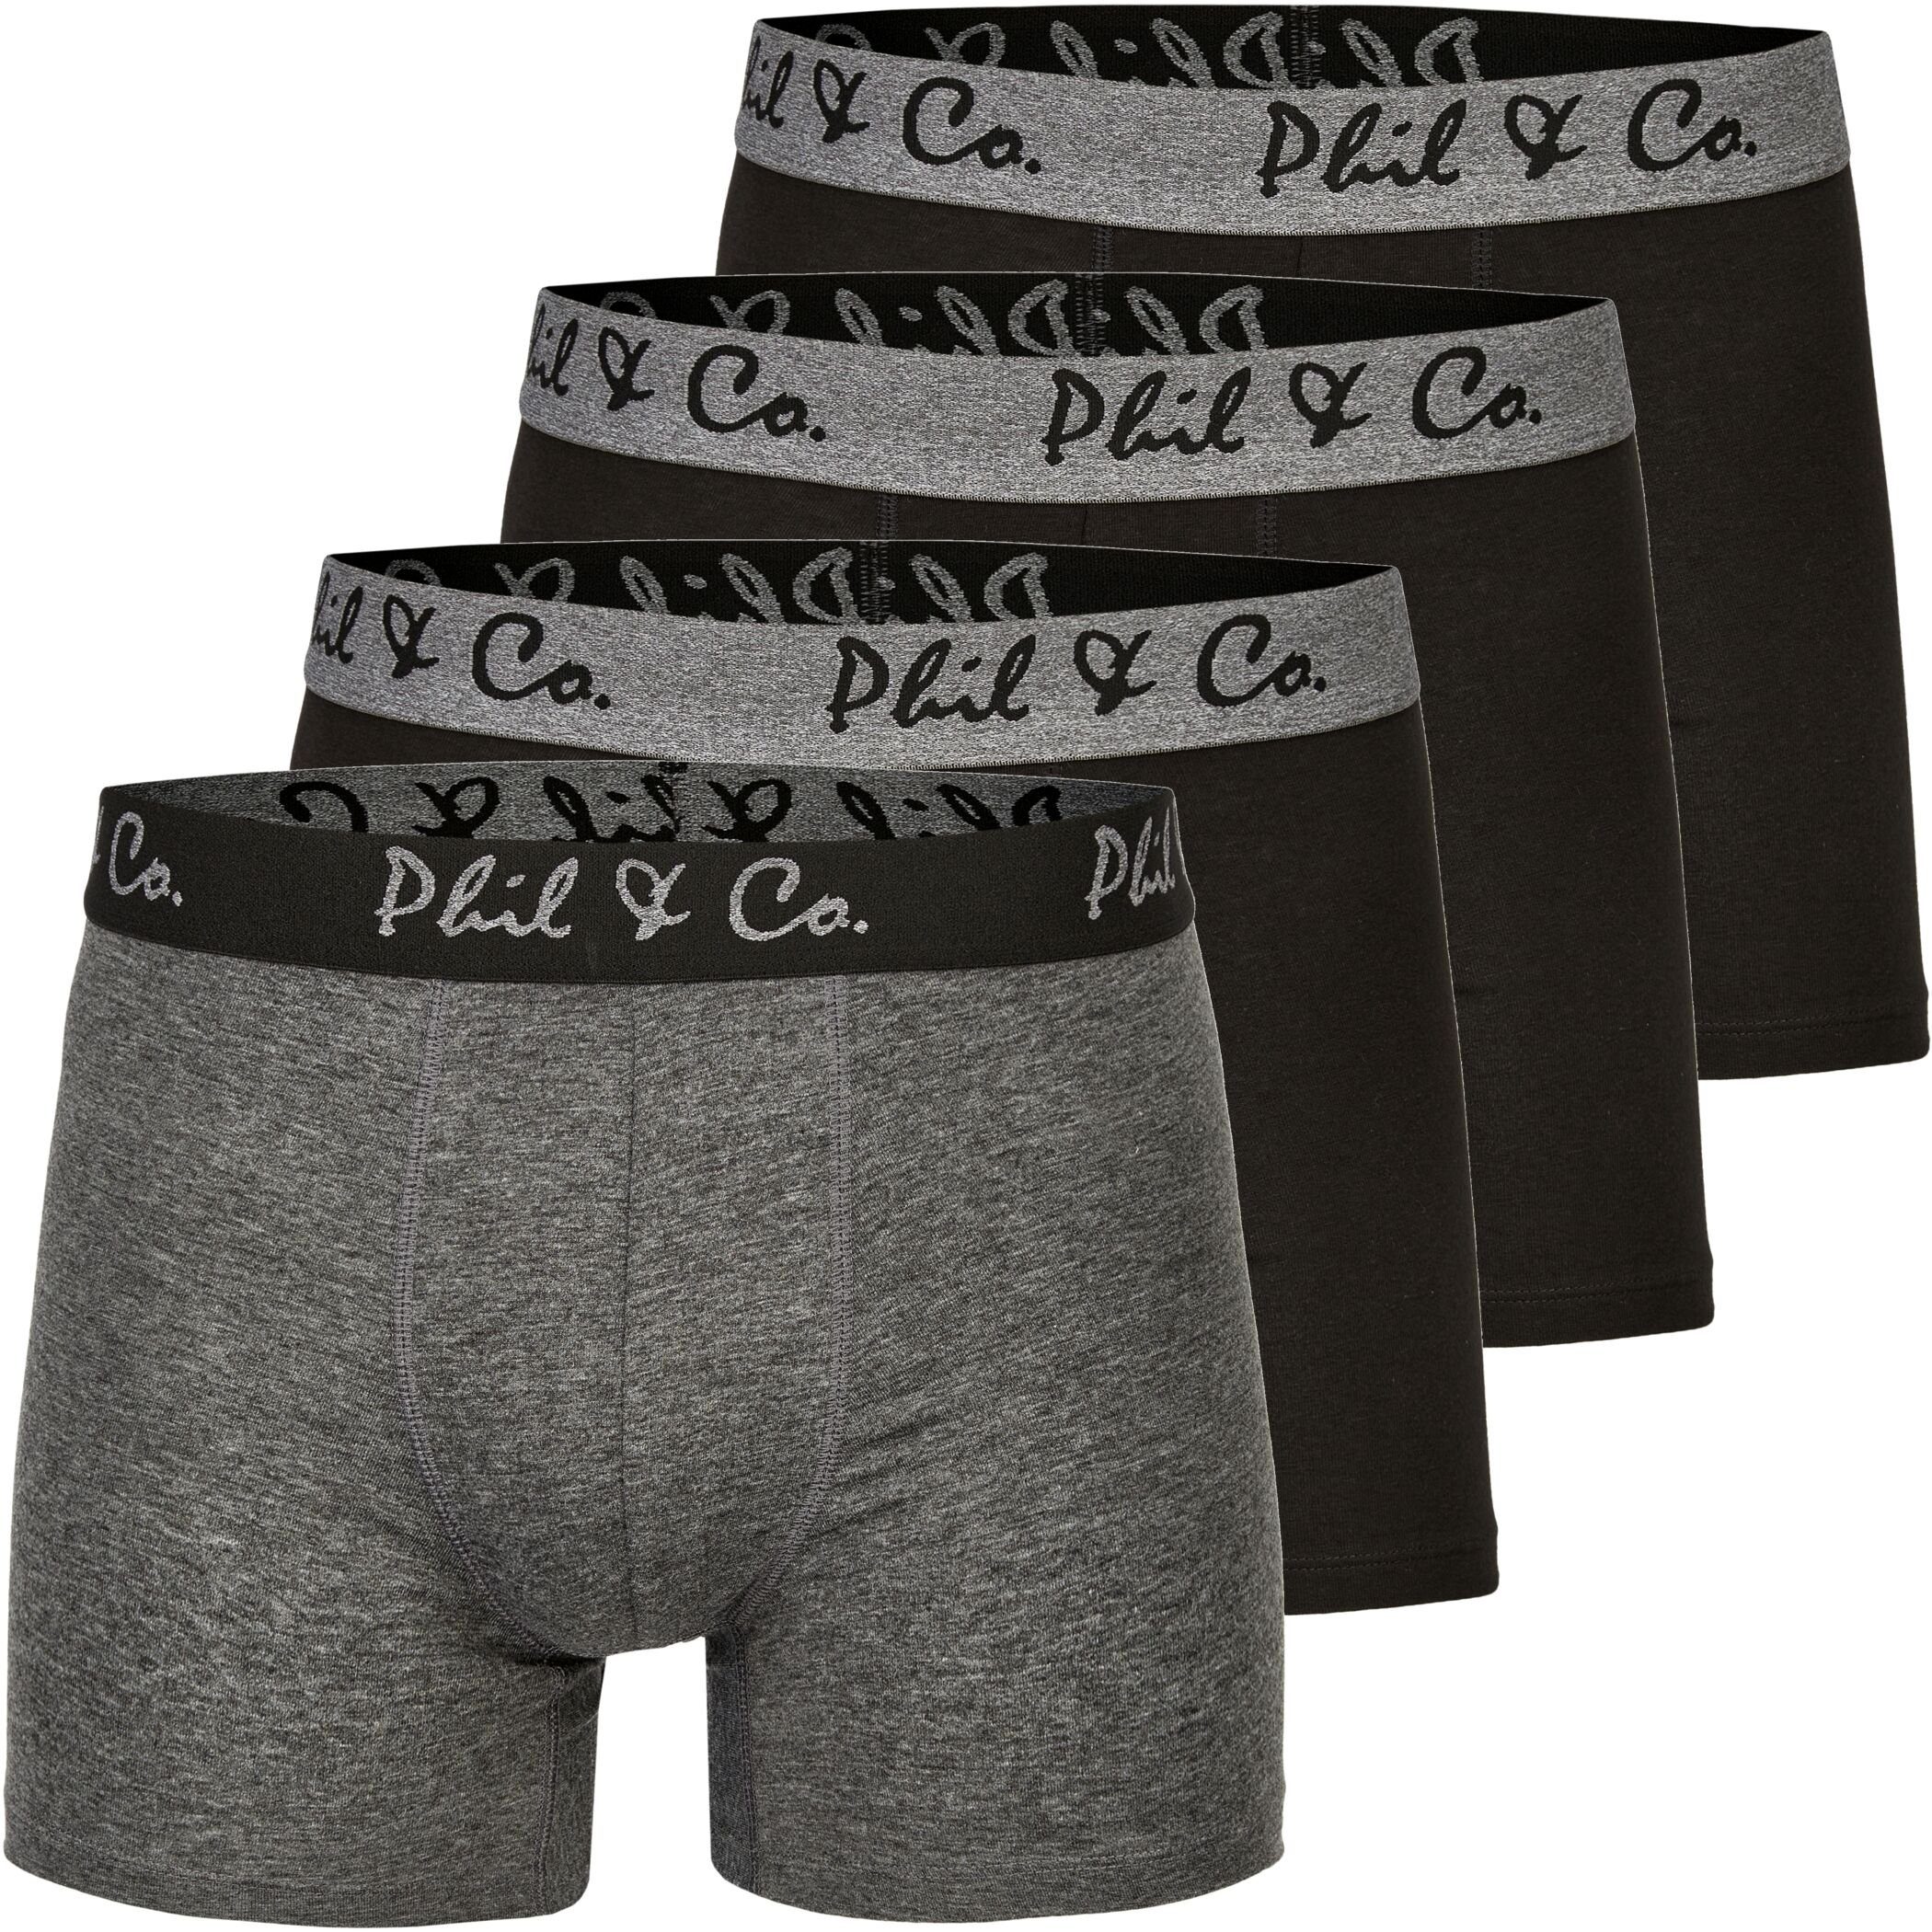 Co (1-St) Boxershorts Boxershorts Short Pack Jersey 03 & FARBWAHL Phil Co. & Trunk Pant Phil DESIGN Berlin 4er